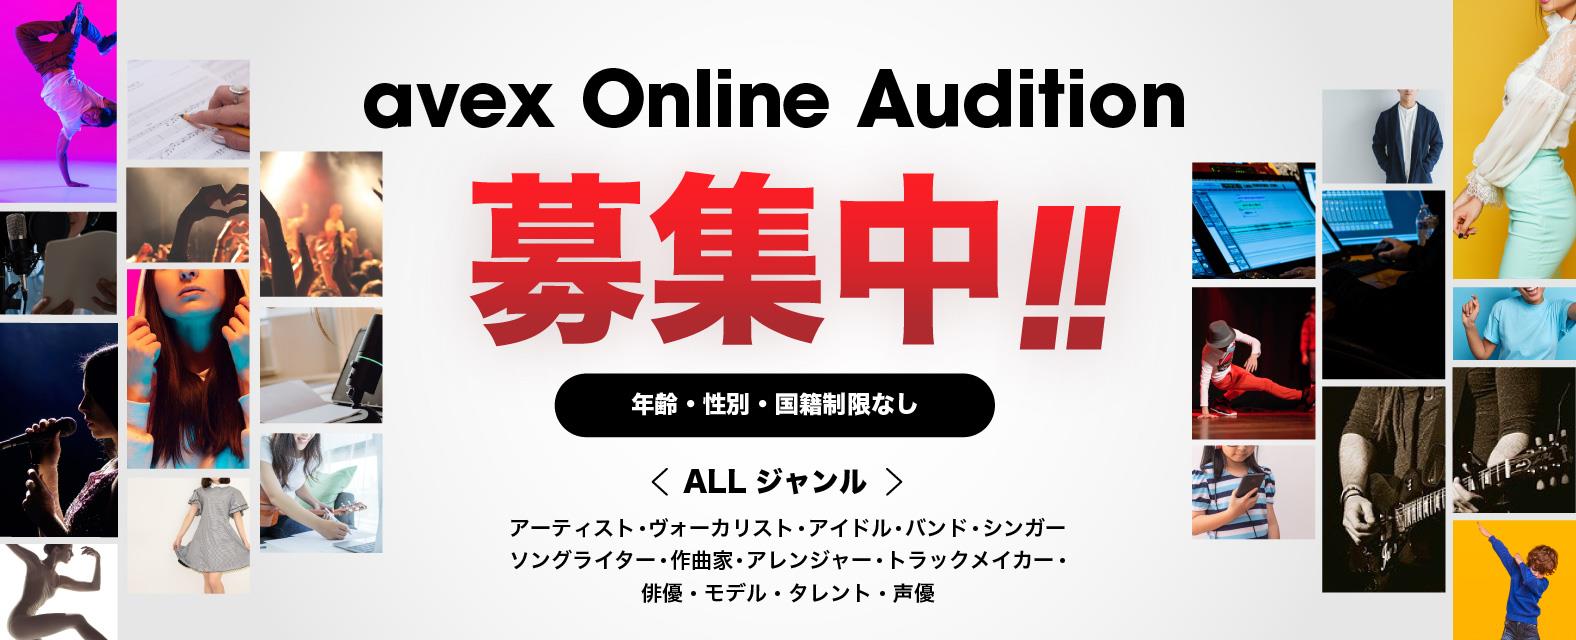 avex Online Audition